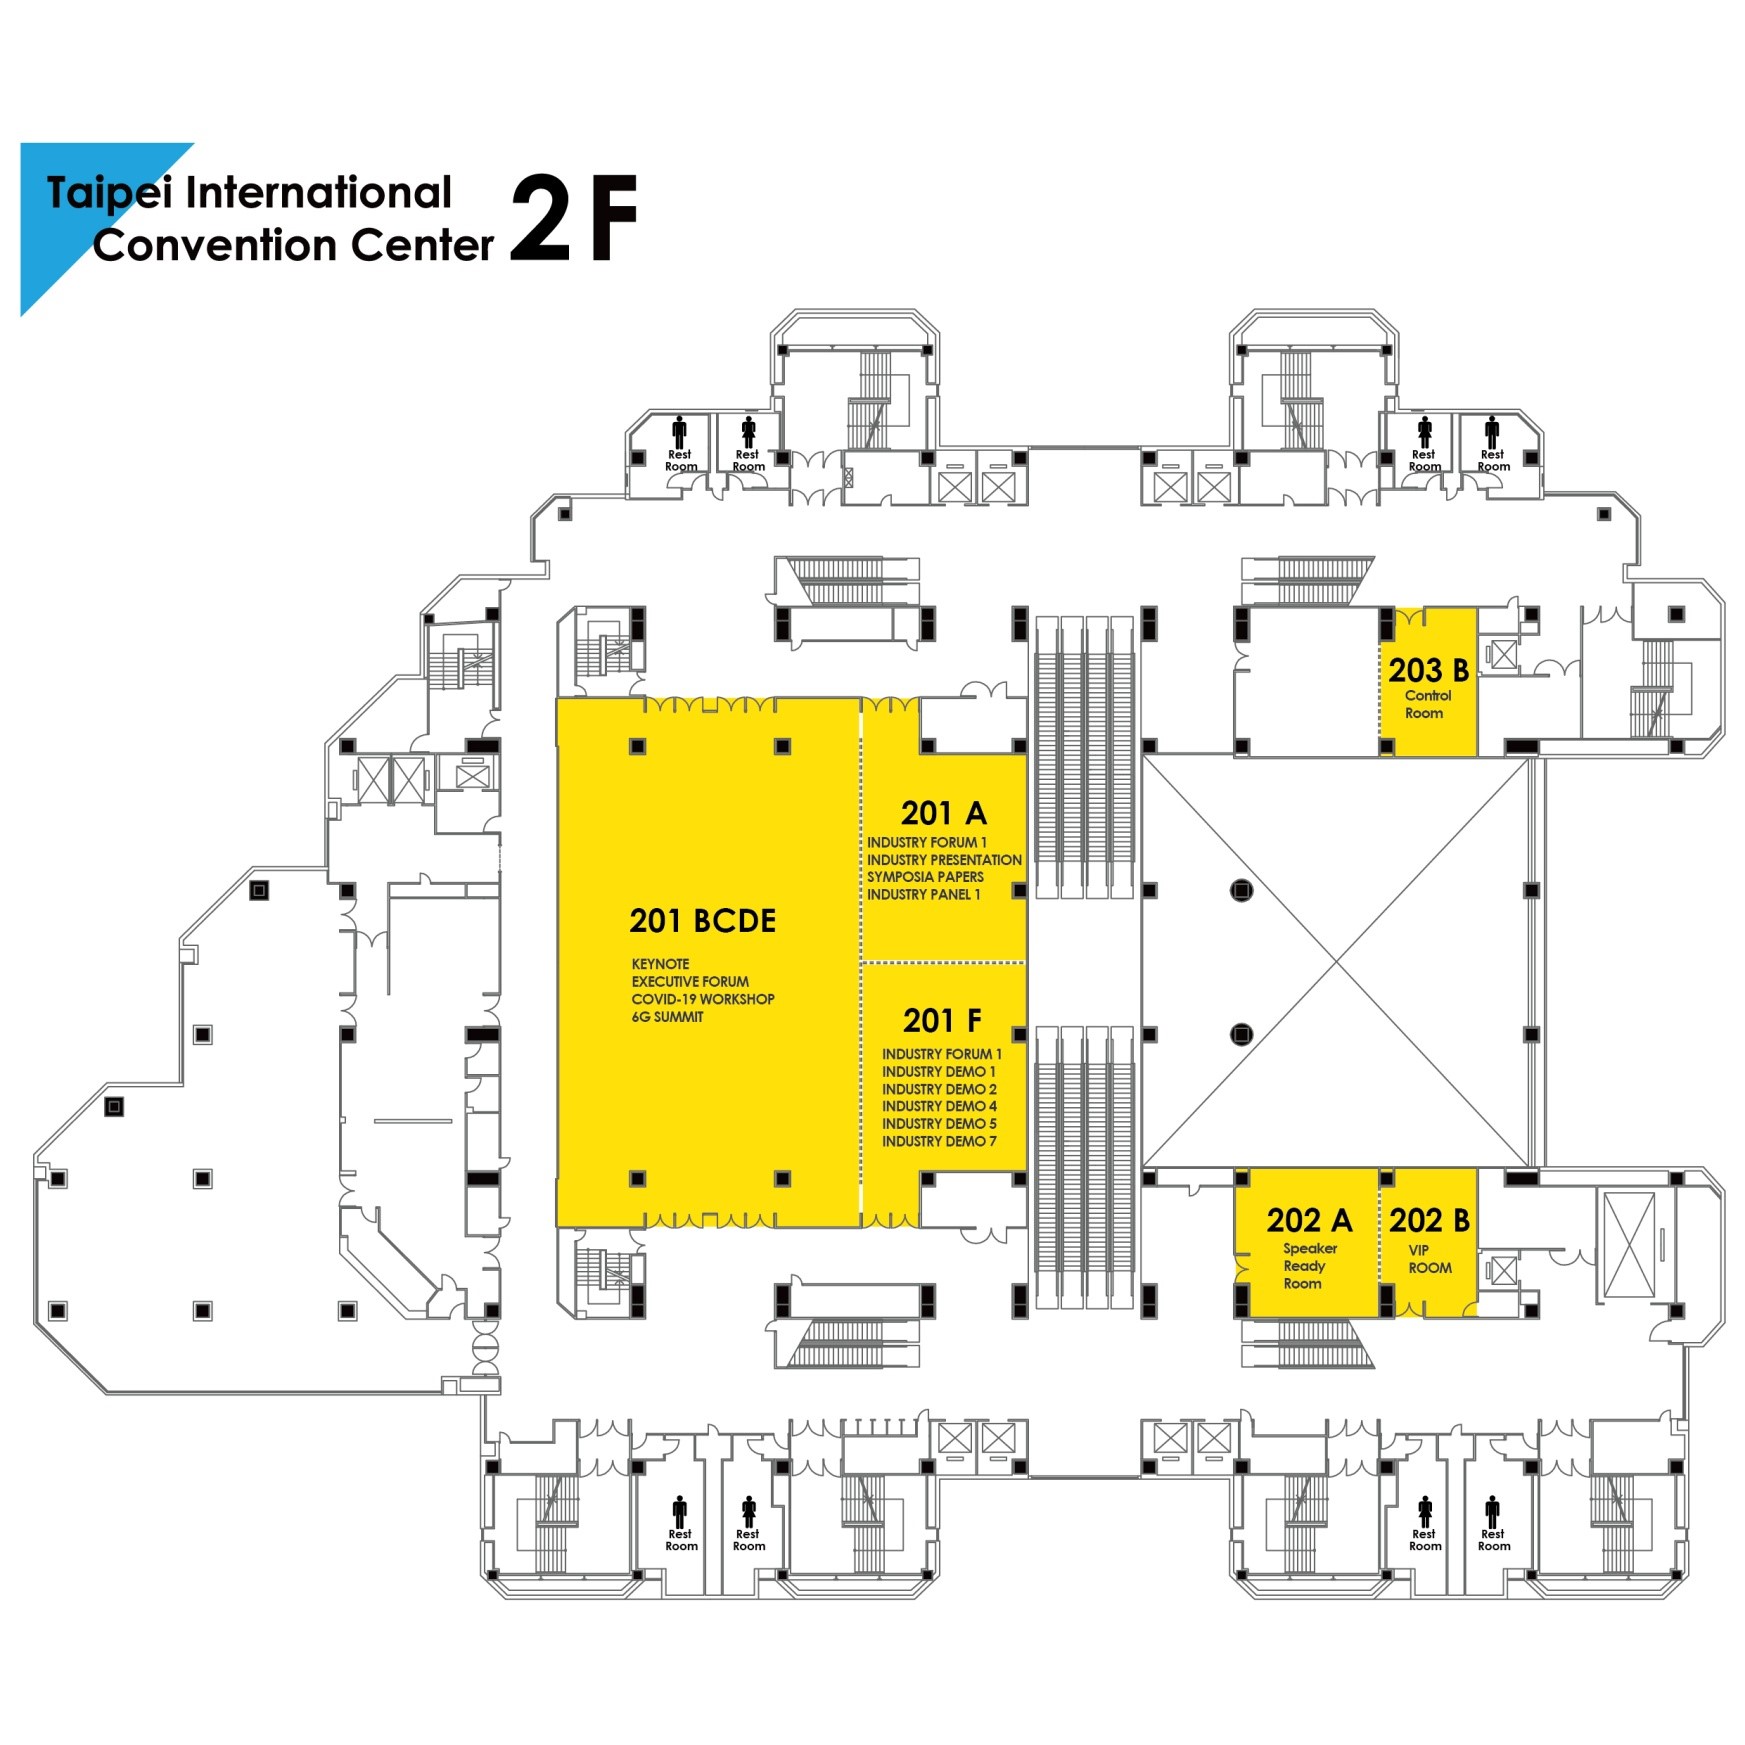 TICC Venue Floor Map 2F